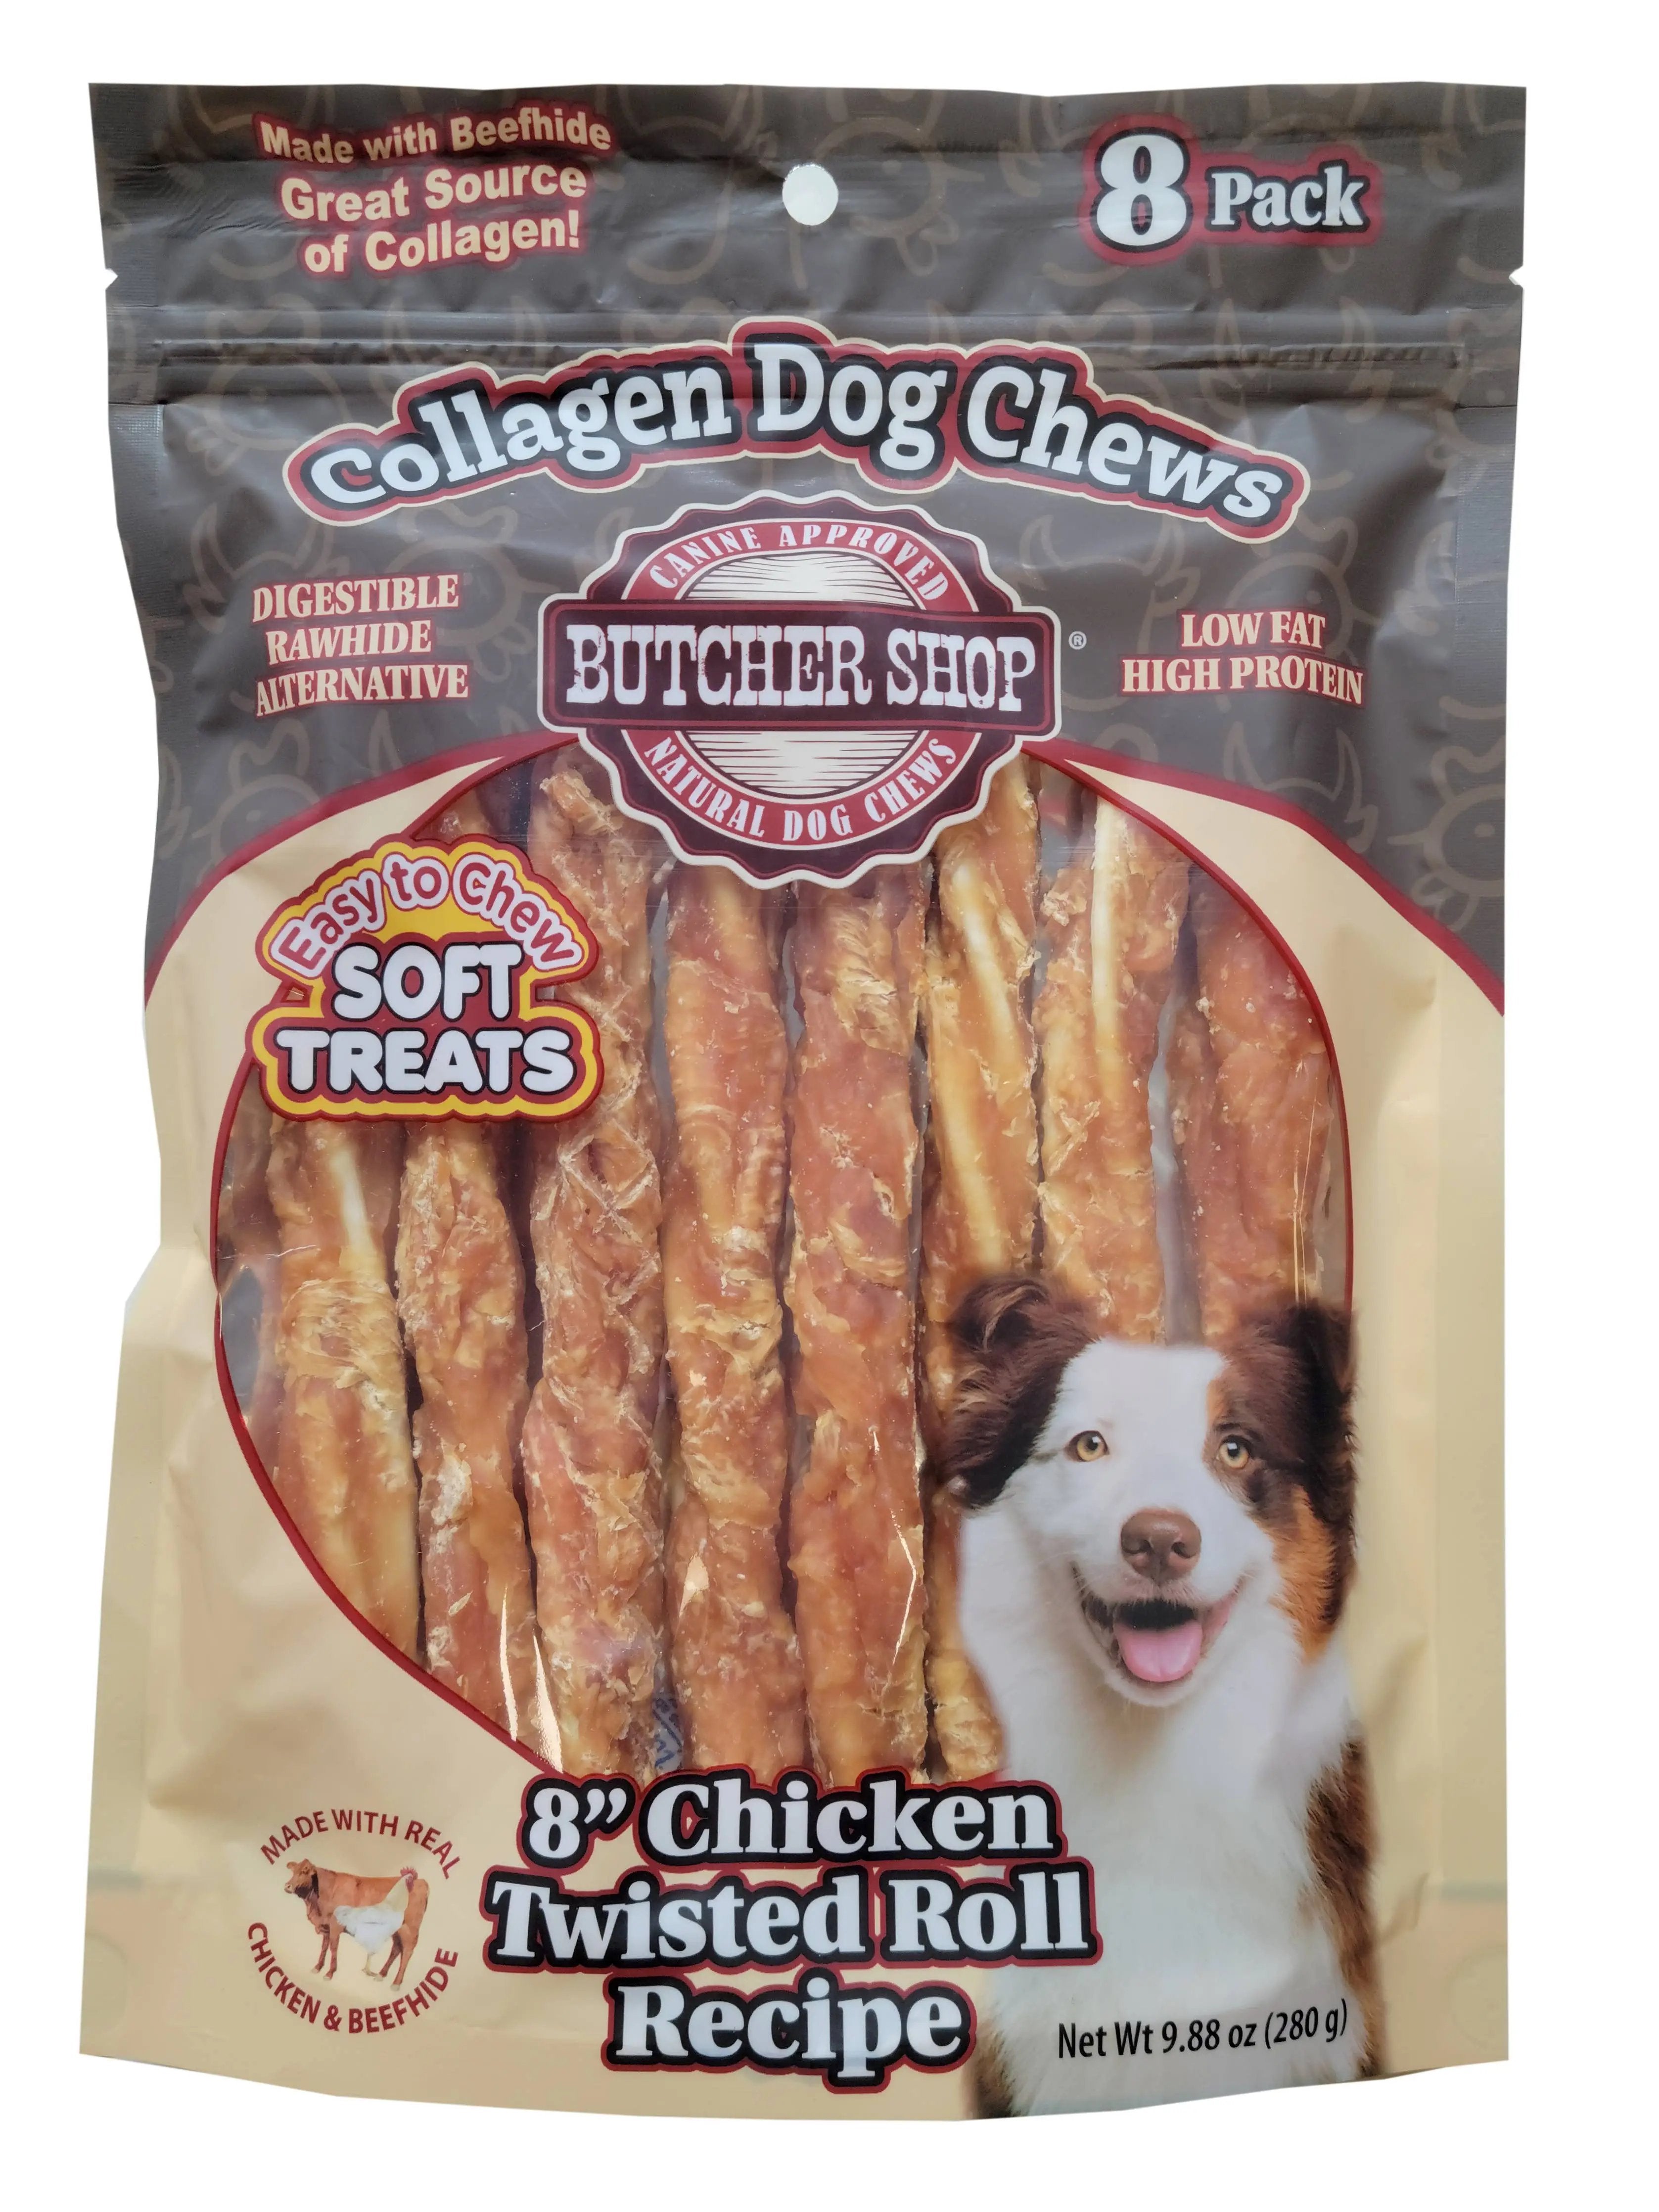 Lovin Tenders Butcher Shop Collagen Dog Chews 8" Chicken Twisted Roll 8-Pk